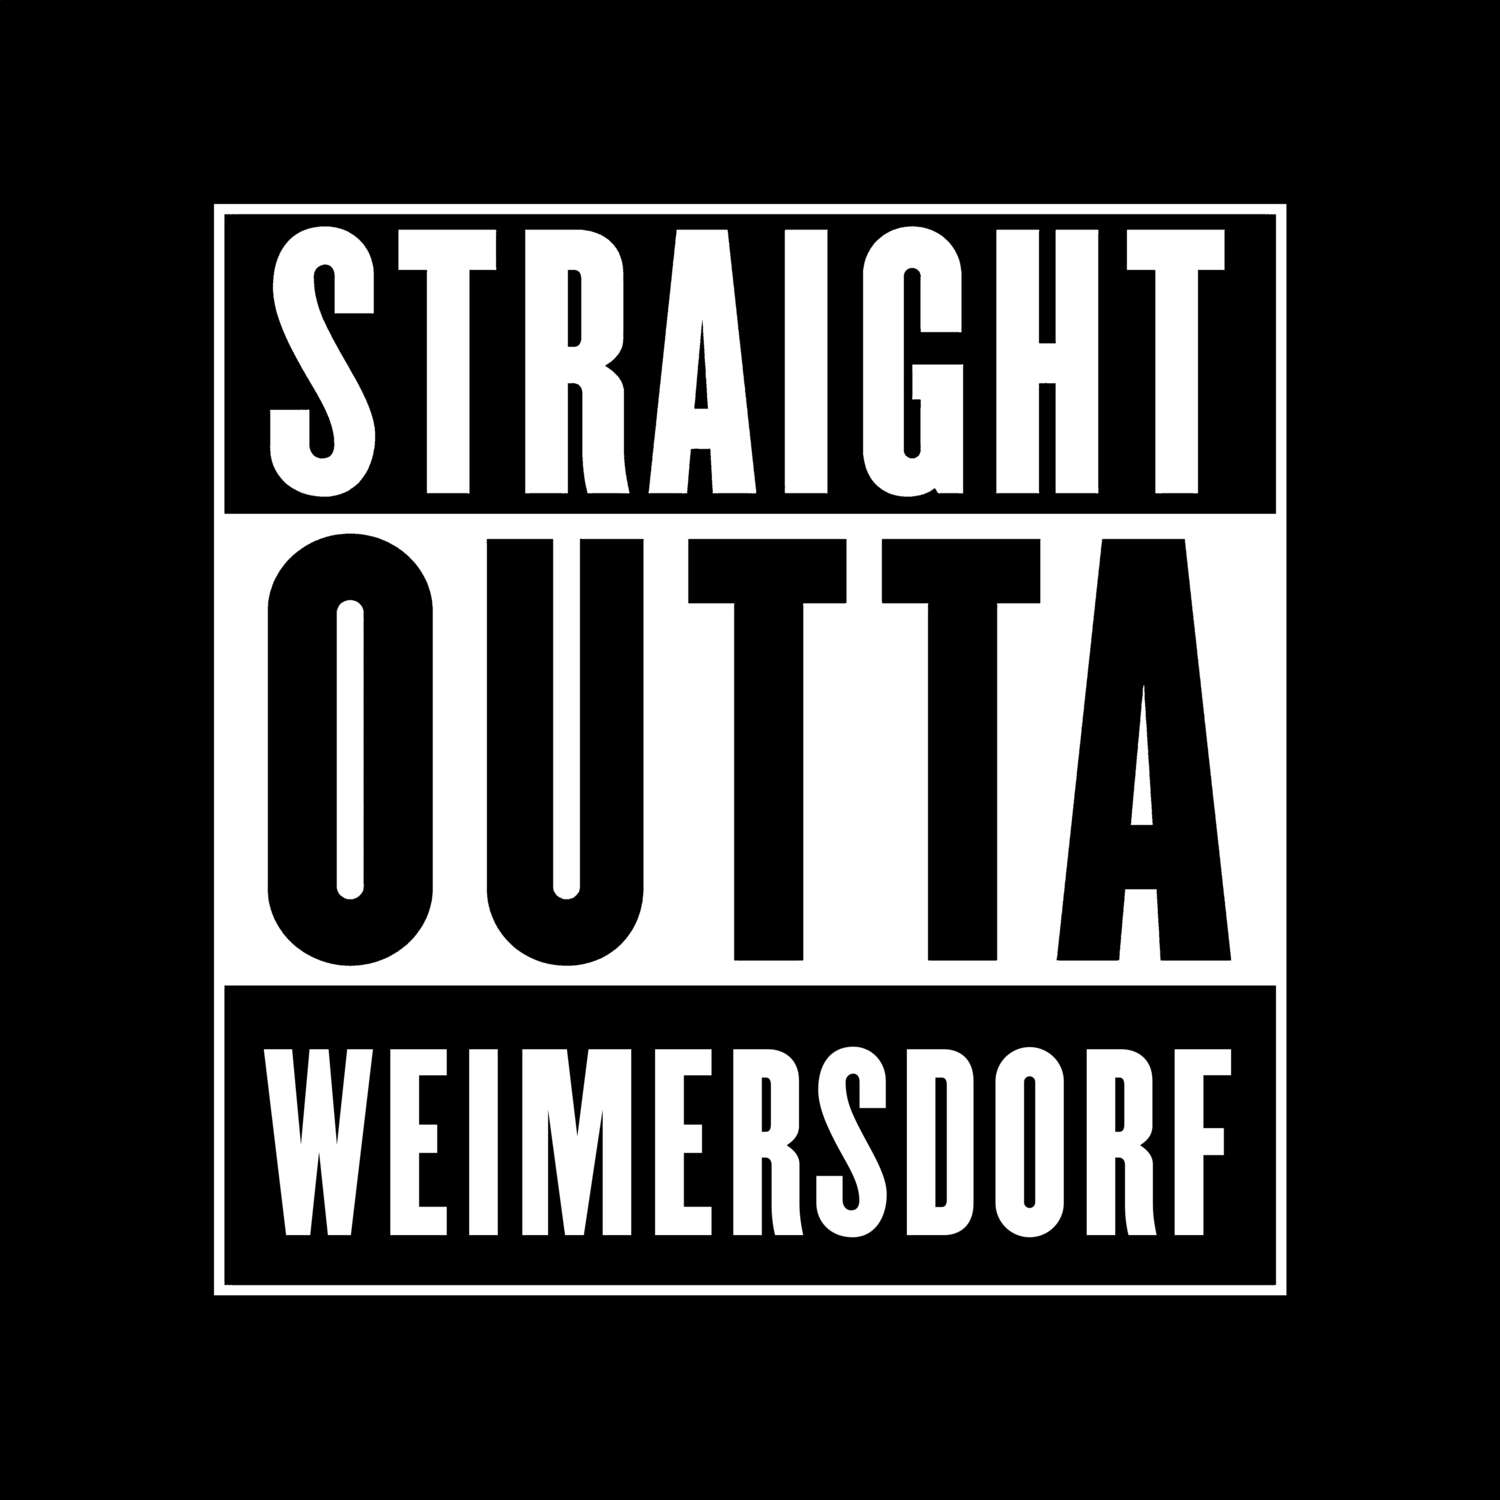 Weimersdorf T-Shirt »Straight Outta«